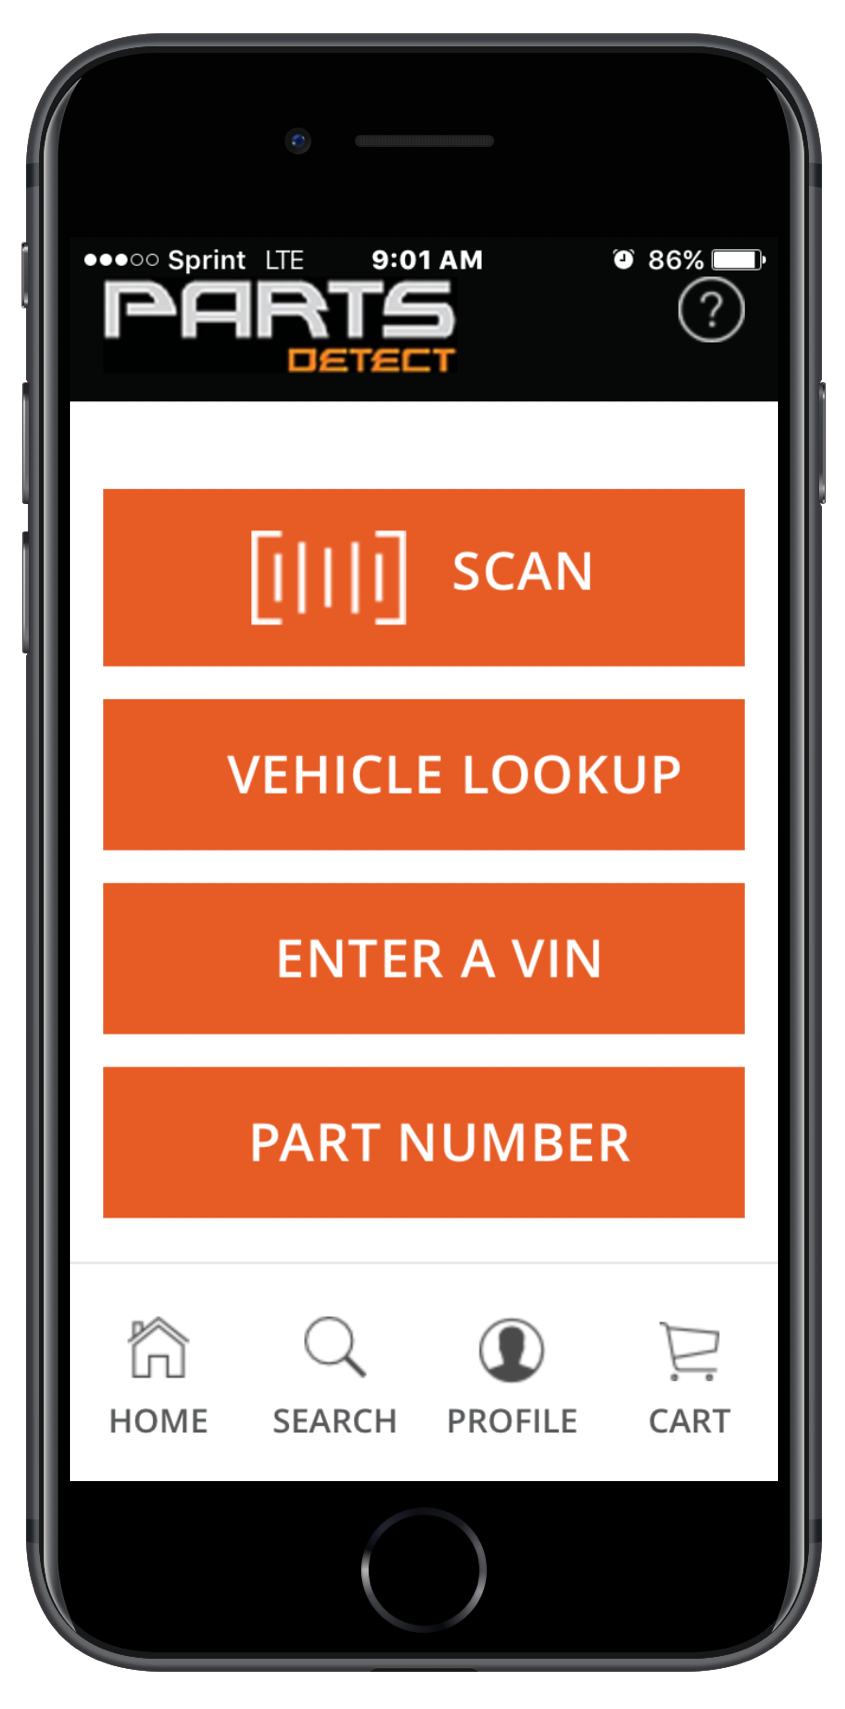 App Main Nav: Scan, Vehicle Lookup, Enter a VIN, Part Number